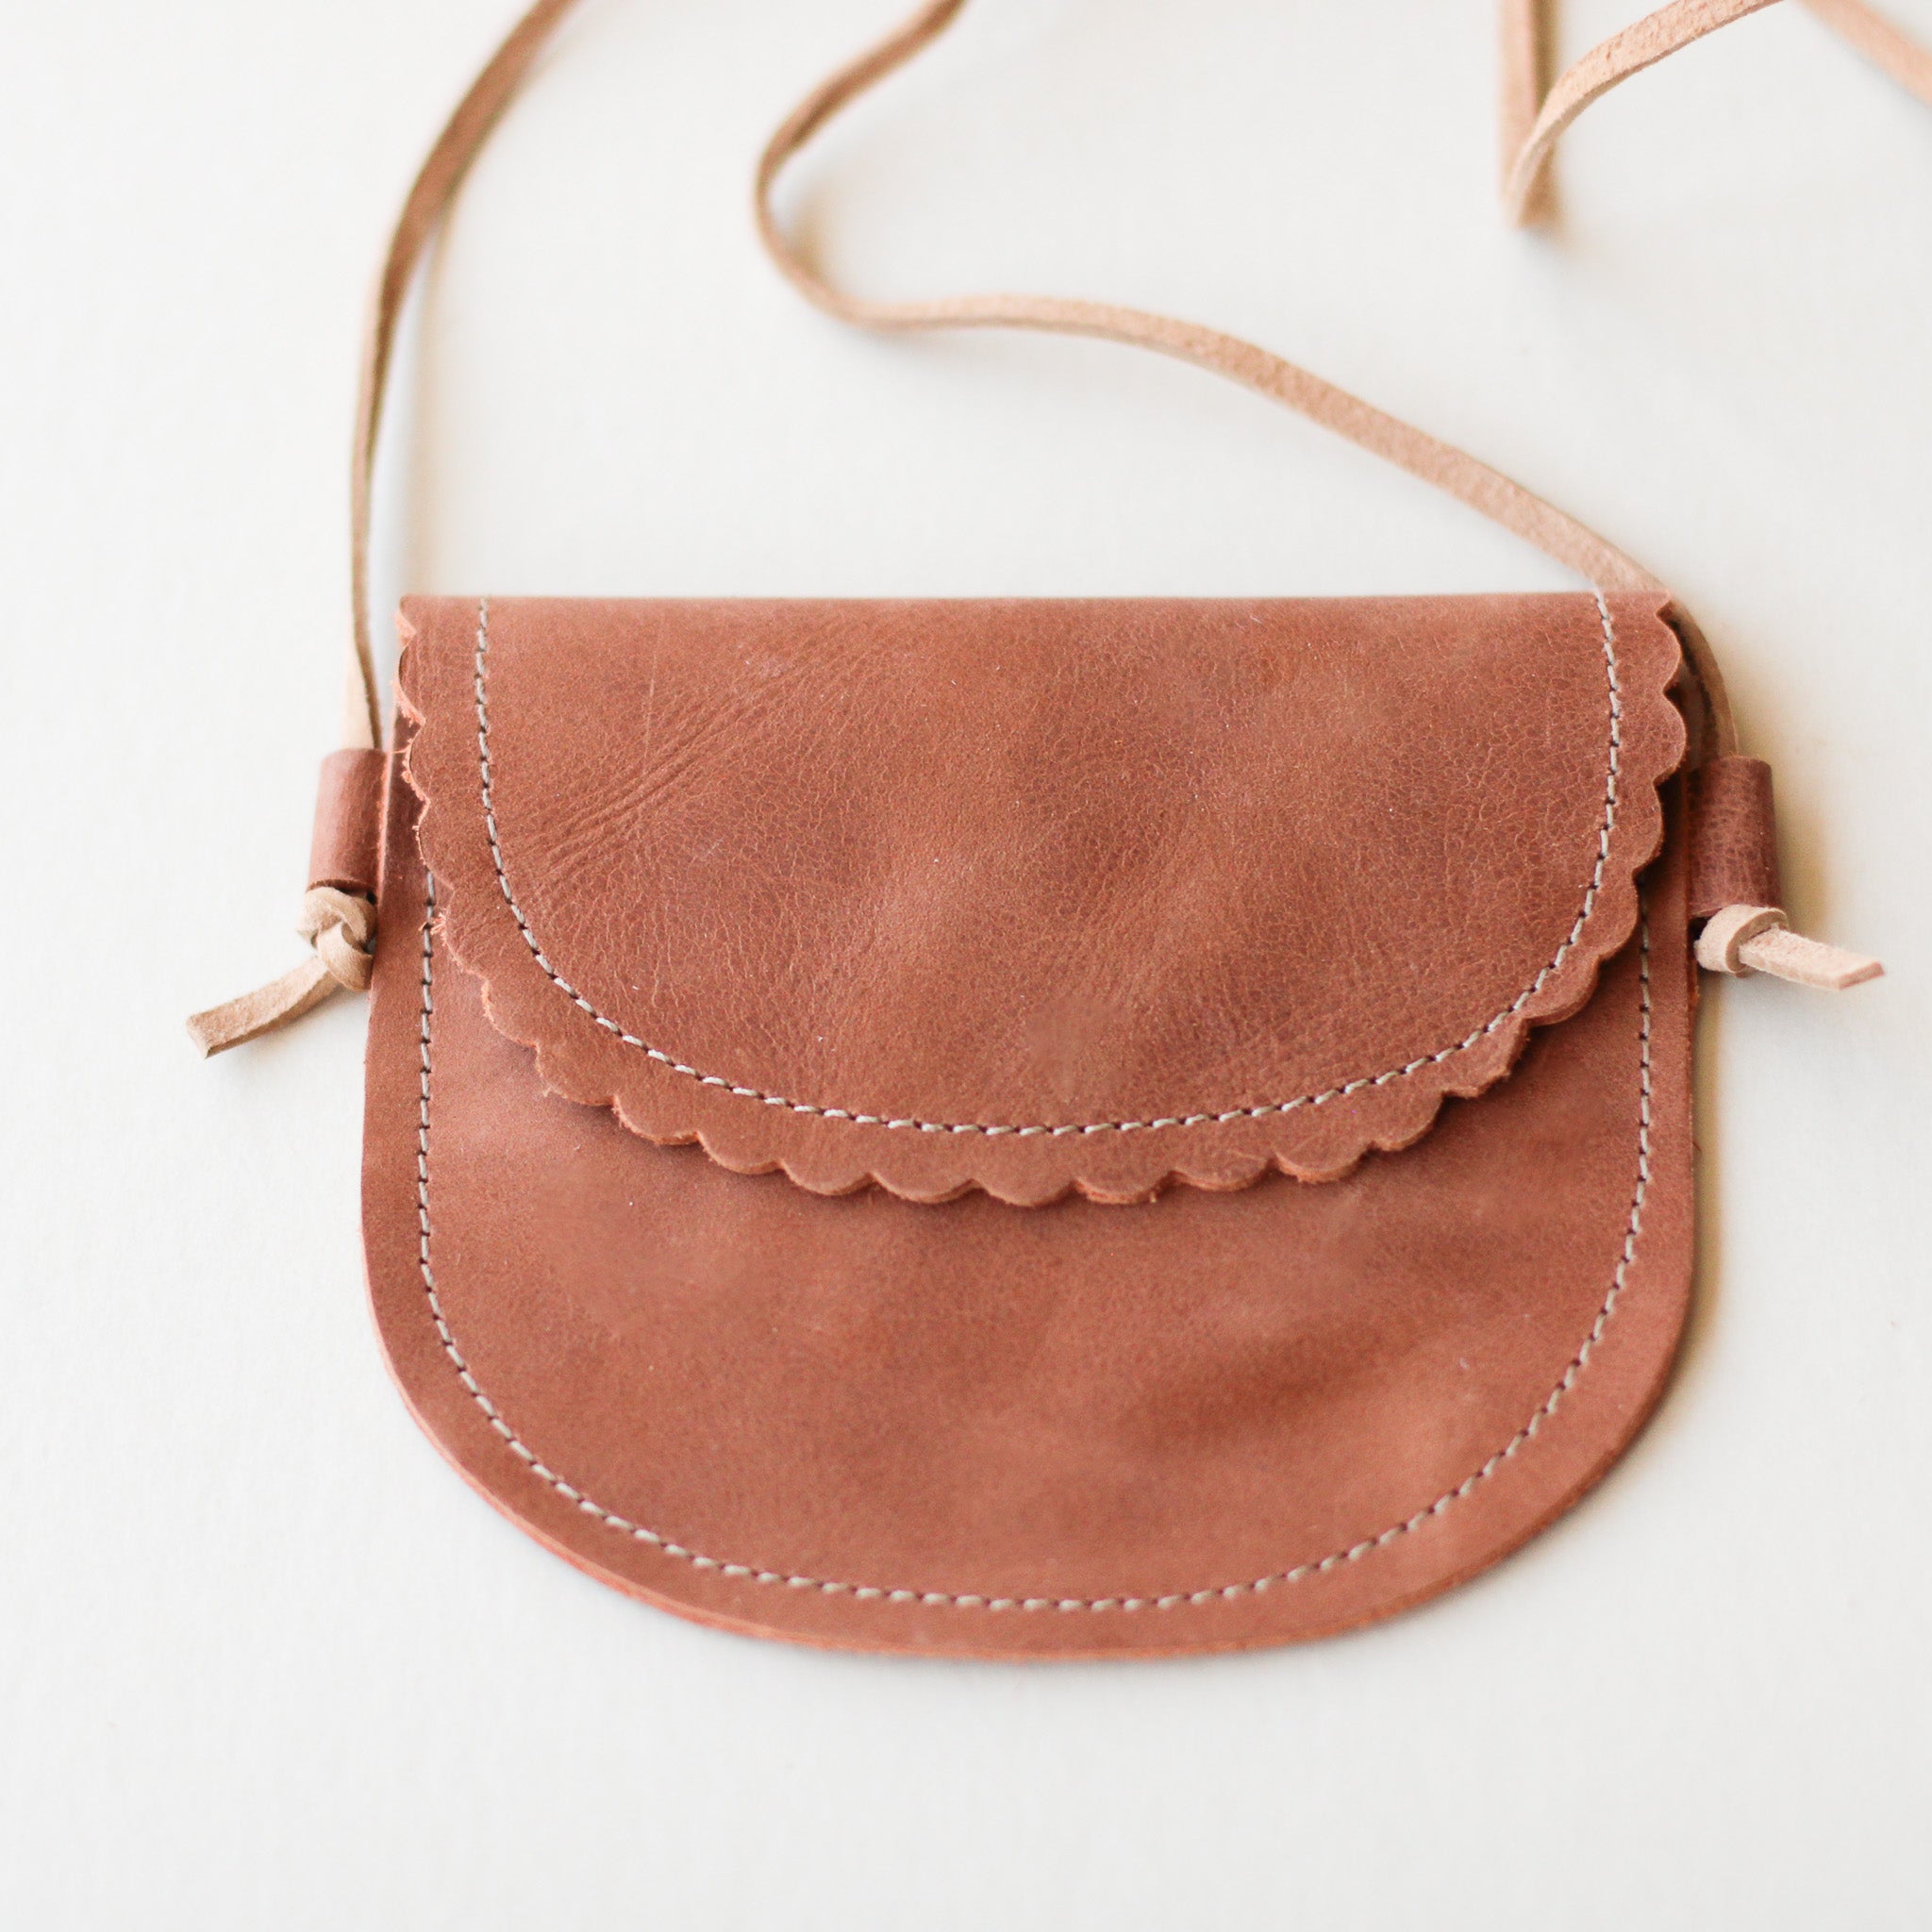 Buy Women's Casual Shoulder bag or Handbag (Light Brown) at Amazon.in